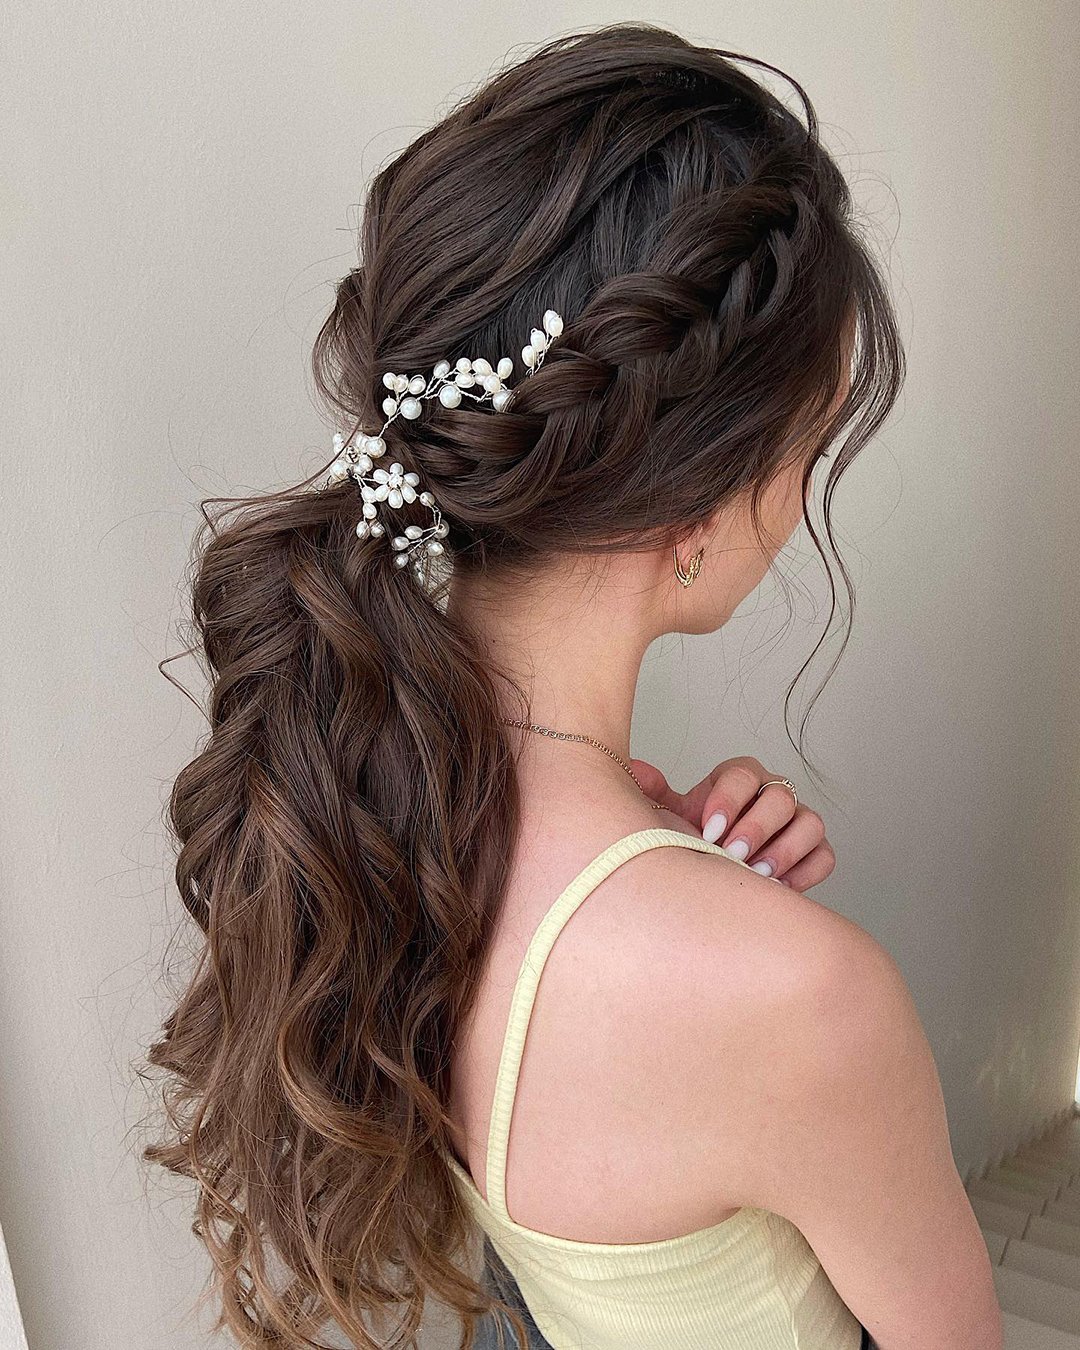 pony tail hairstyles wedding simple curly with braid liliy_chernyshova